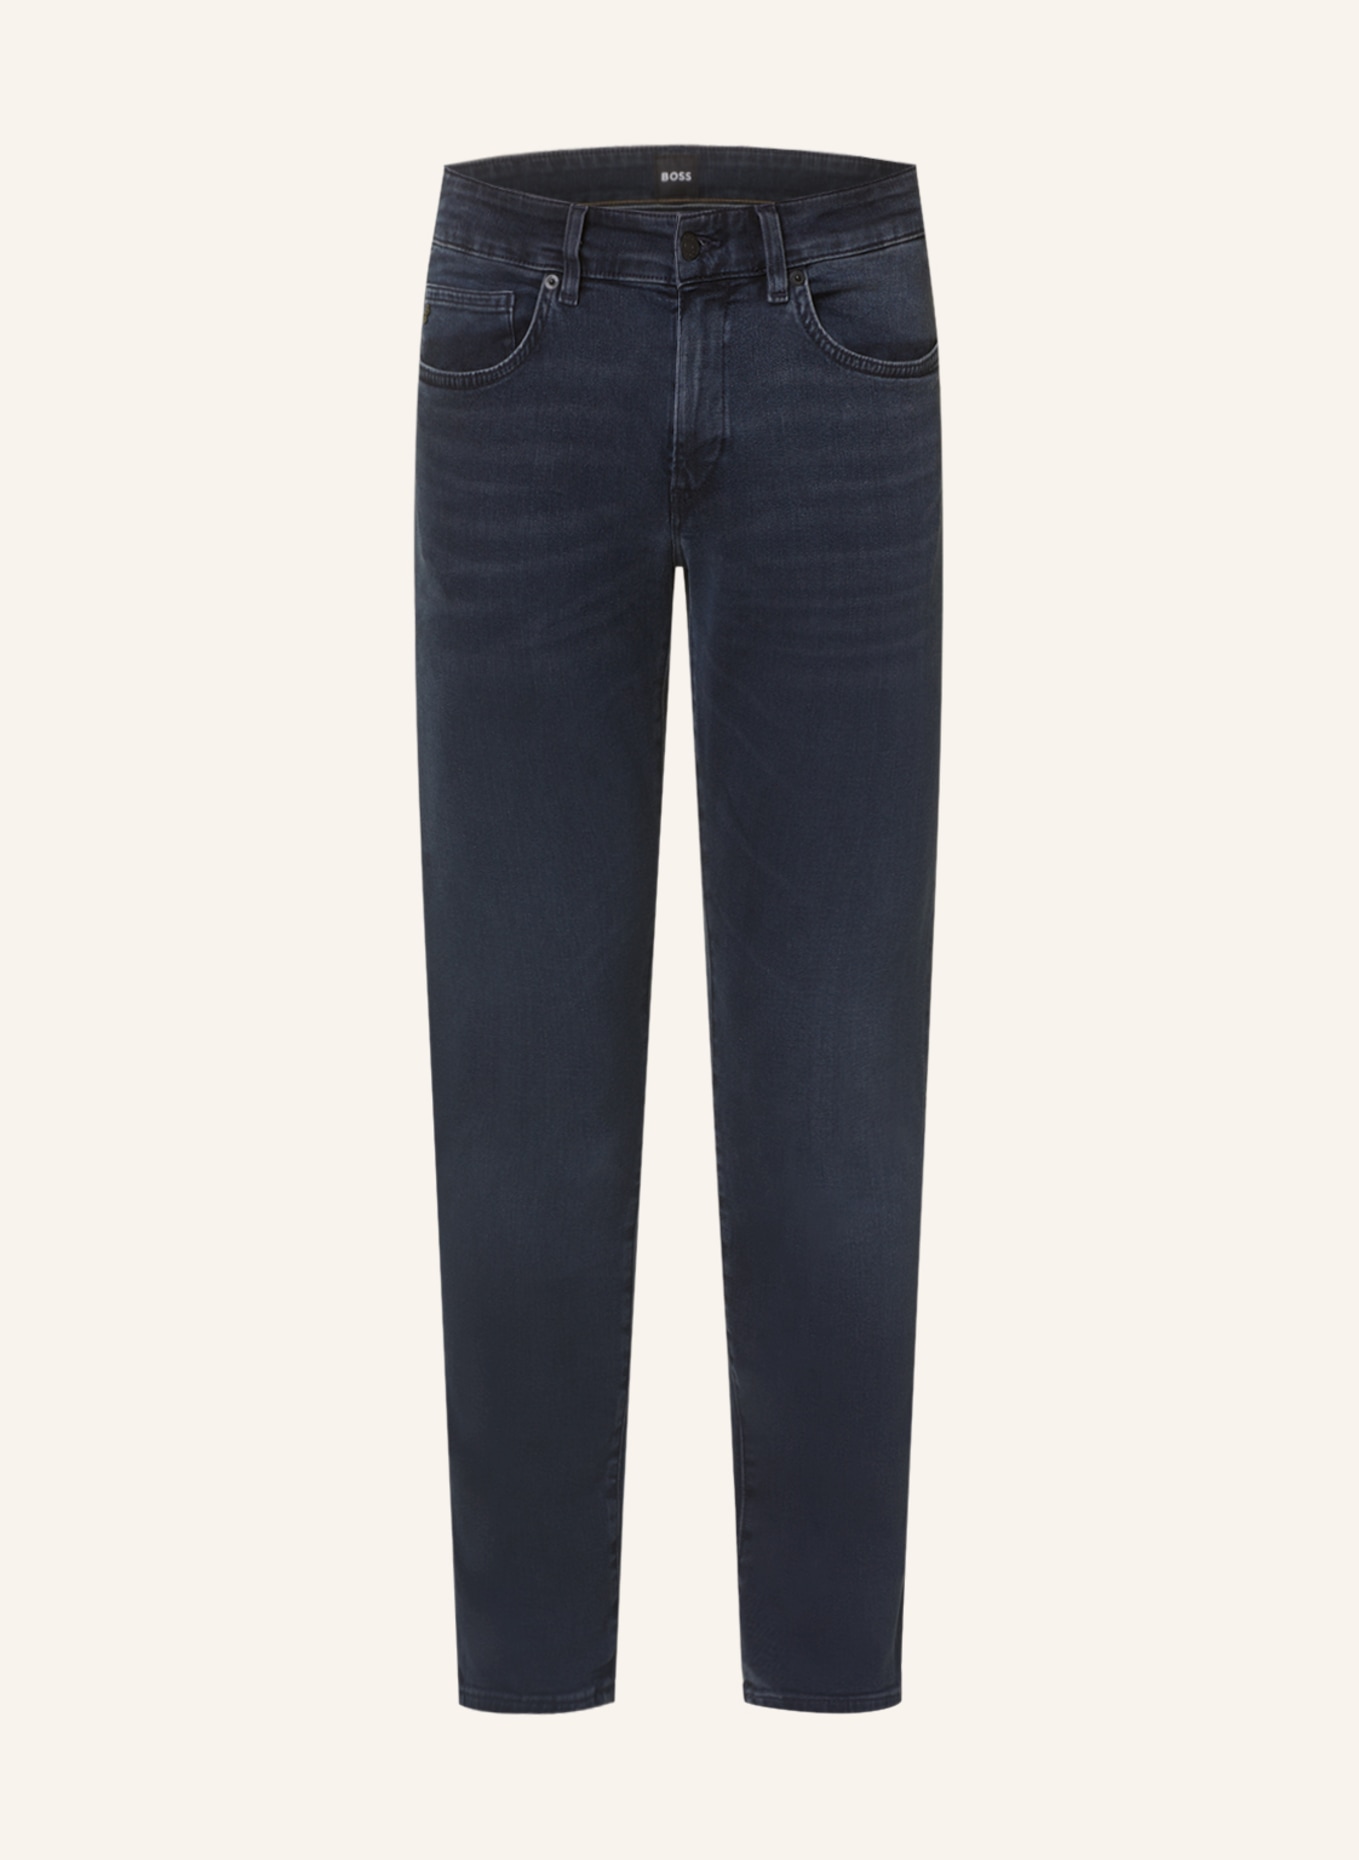 BOSS Jeans DELAWARE Slim Fit, Farbe: 403 DARK BLUE (Bild 1)